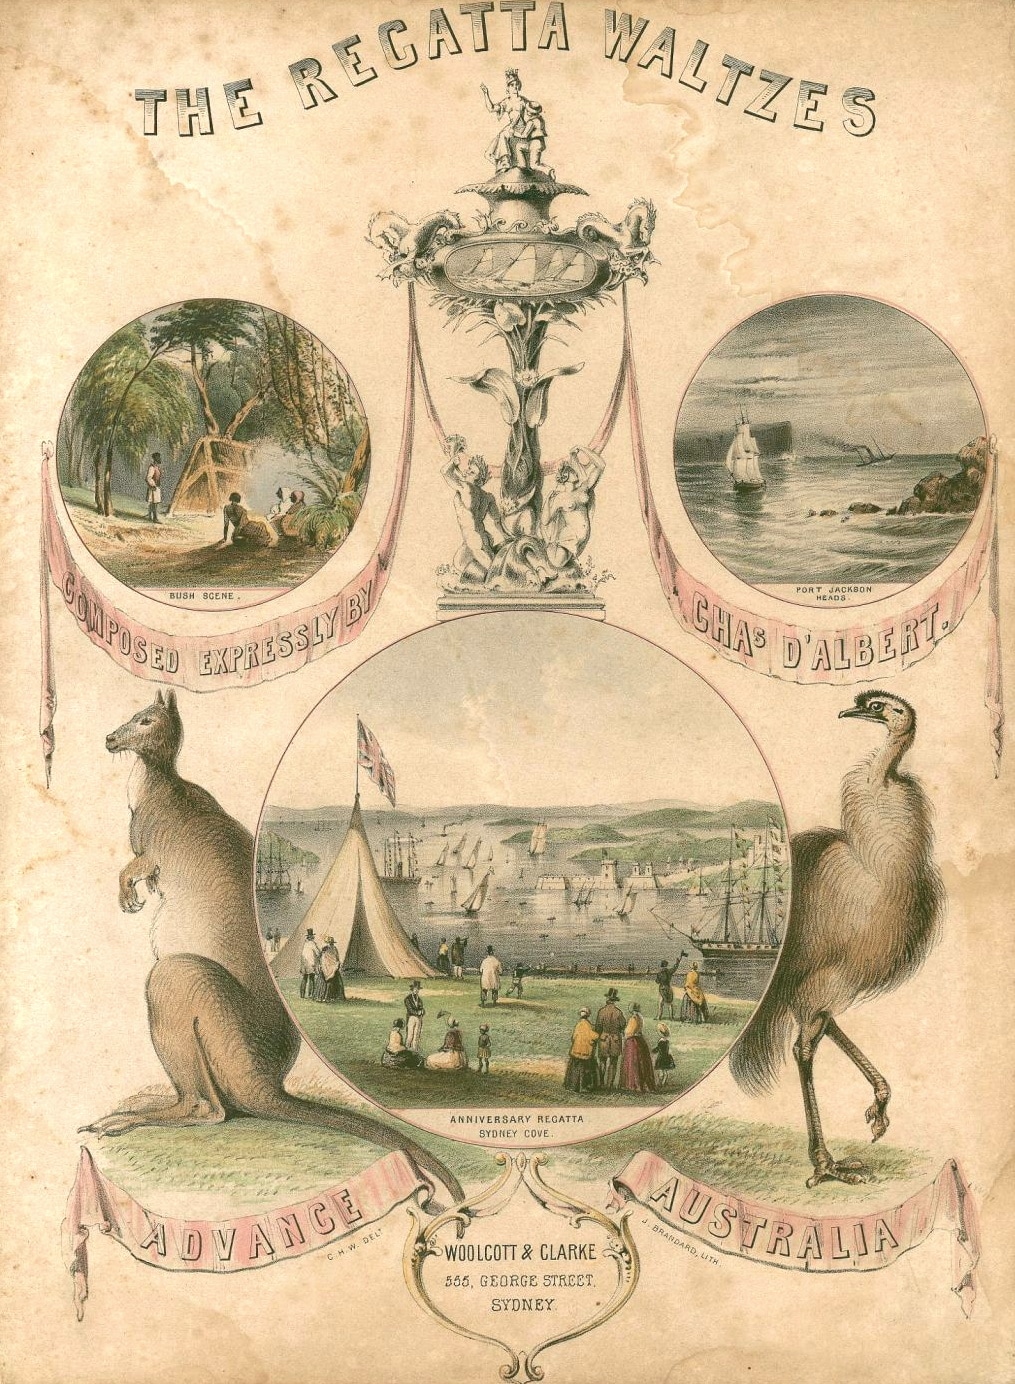 Regatta waltzes, Sydney, 1855, cover drawn by Charles Henry Woolcott